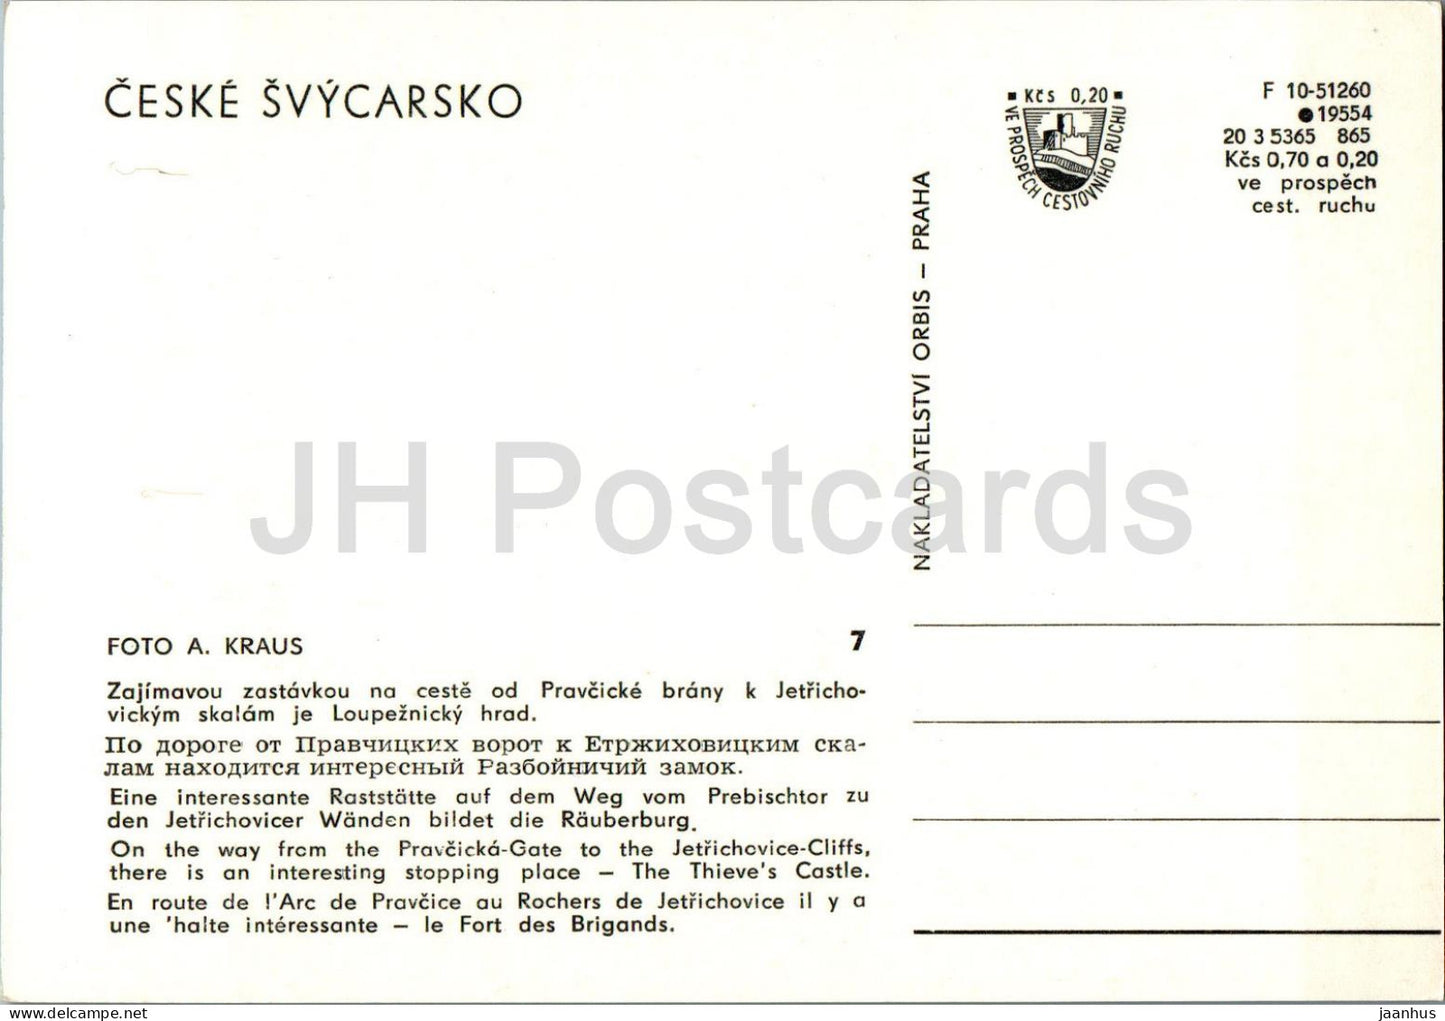 Ceske Svycarsko - The Thieve's Castle - 7 - Czech Repubic - Czechoslovakia - unused